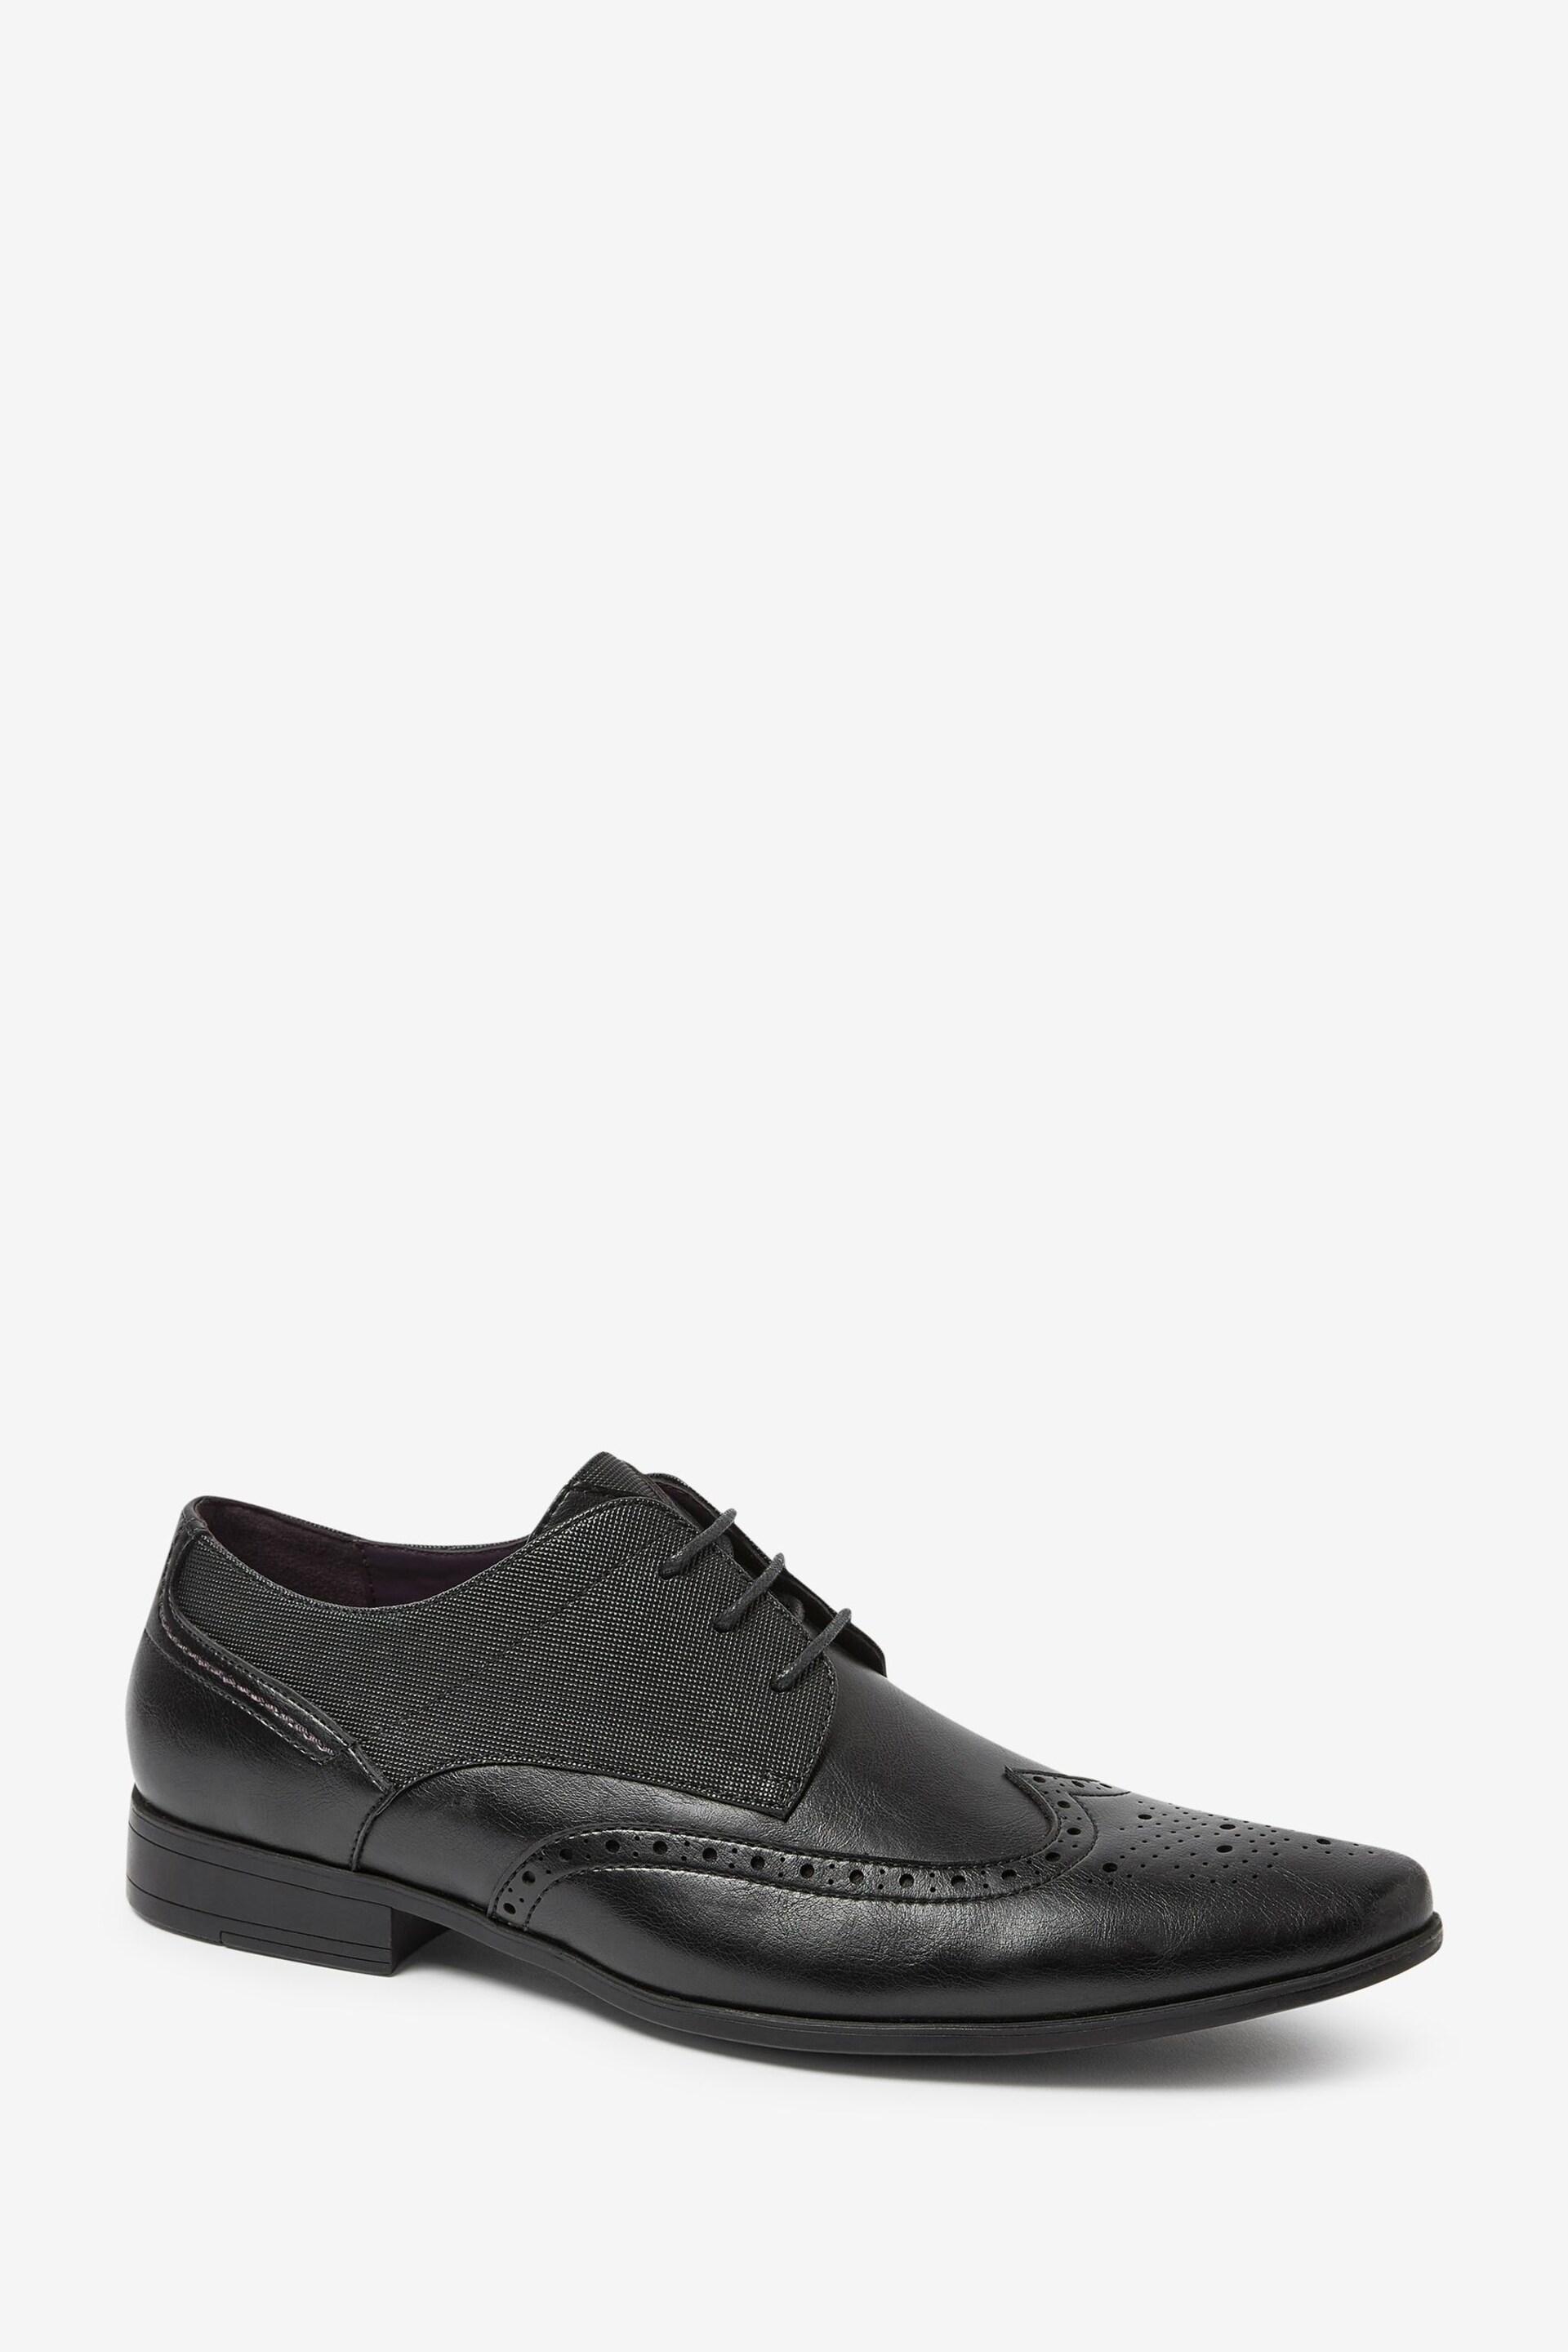 Black Brogue Shoes - Image 3 of 5